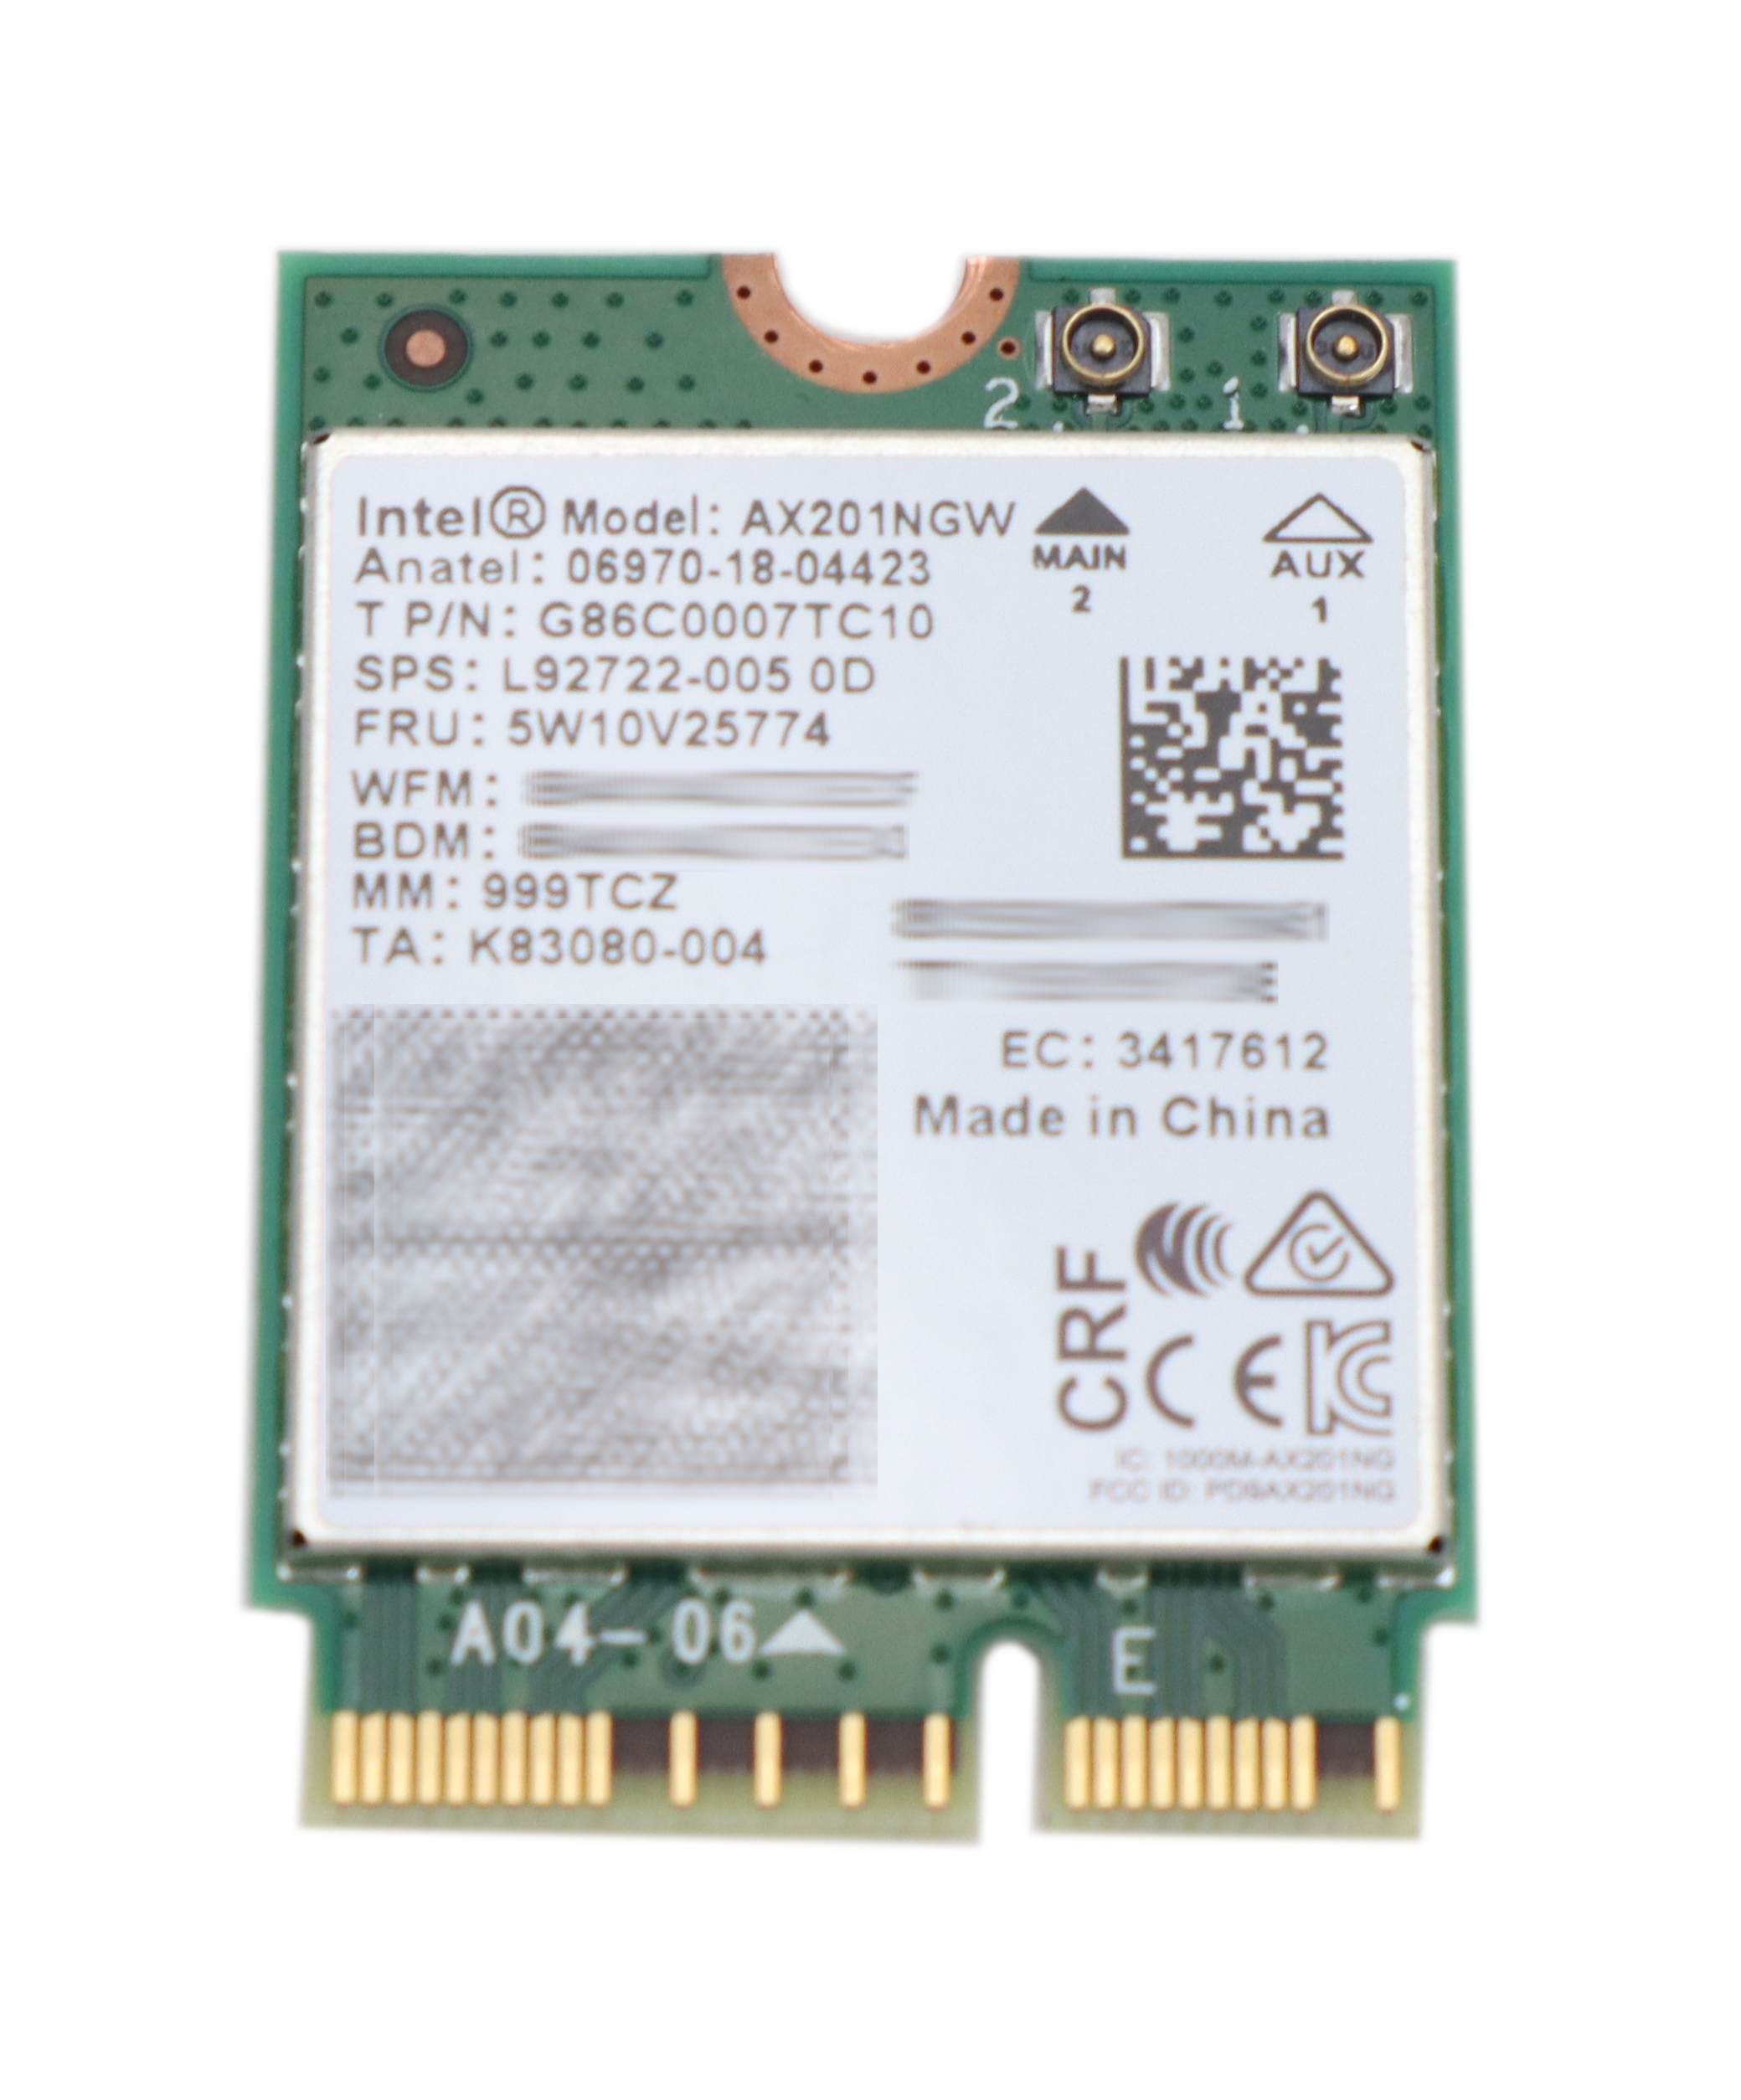 HP Intel AX201NGW Dual Band Wi-Fi 6 2.4 5GHz Bluetooth Network Card L92722-005